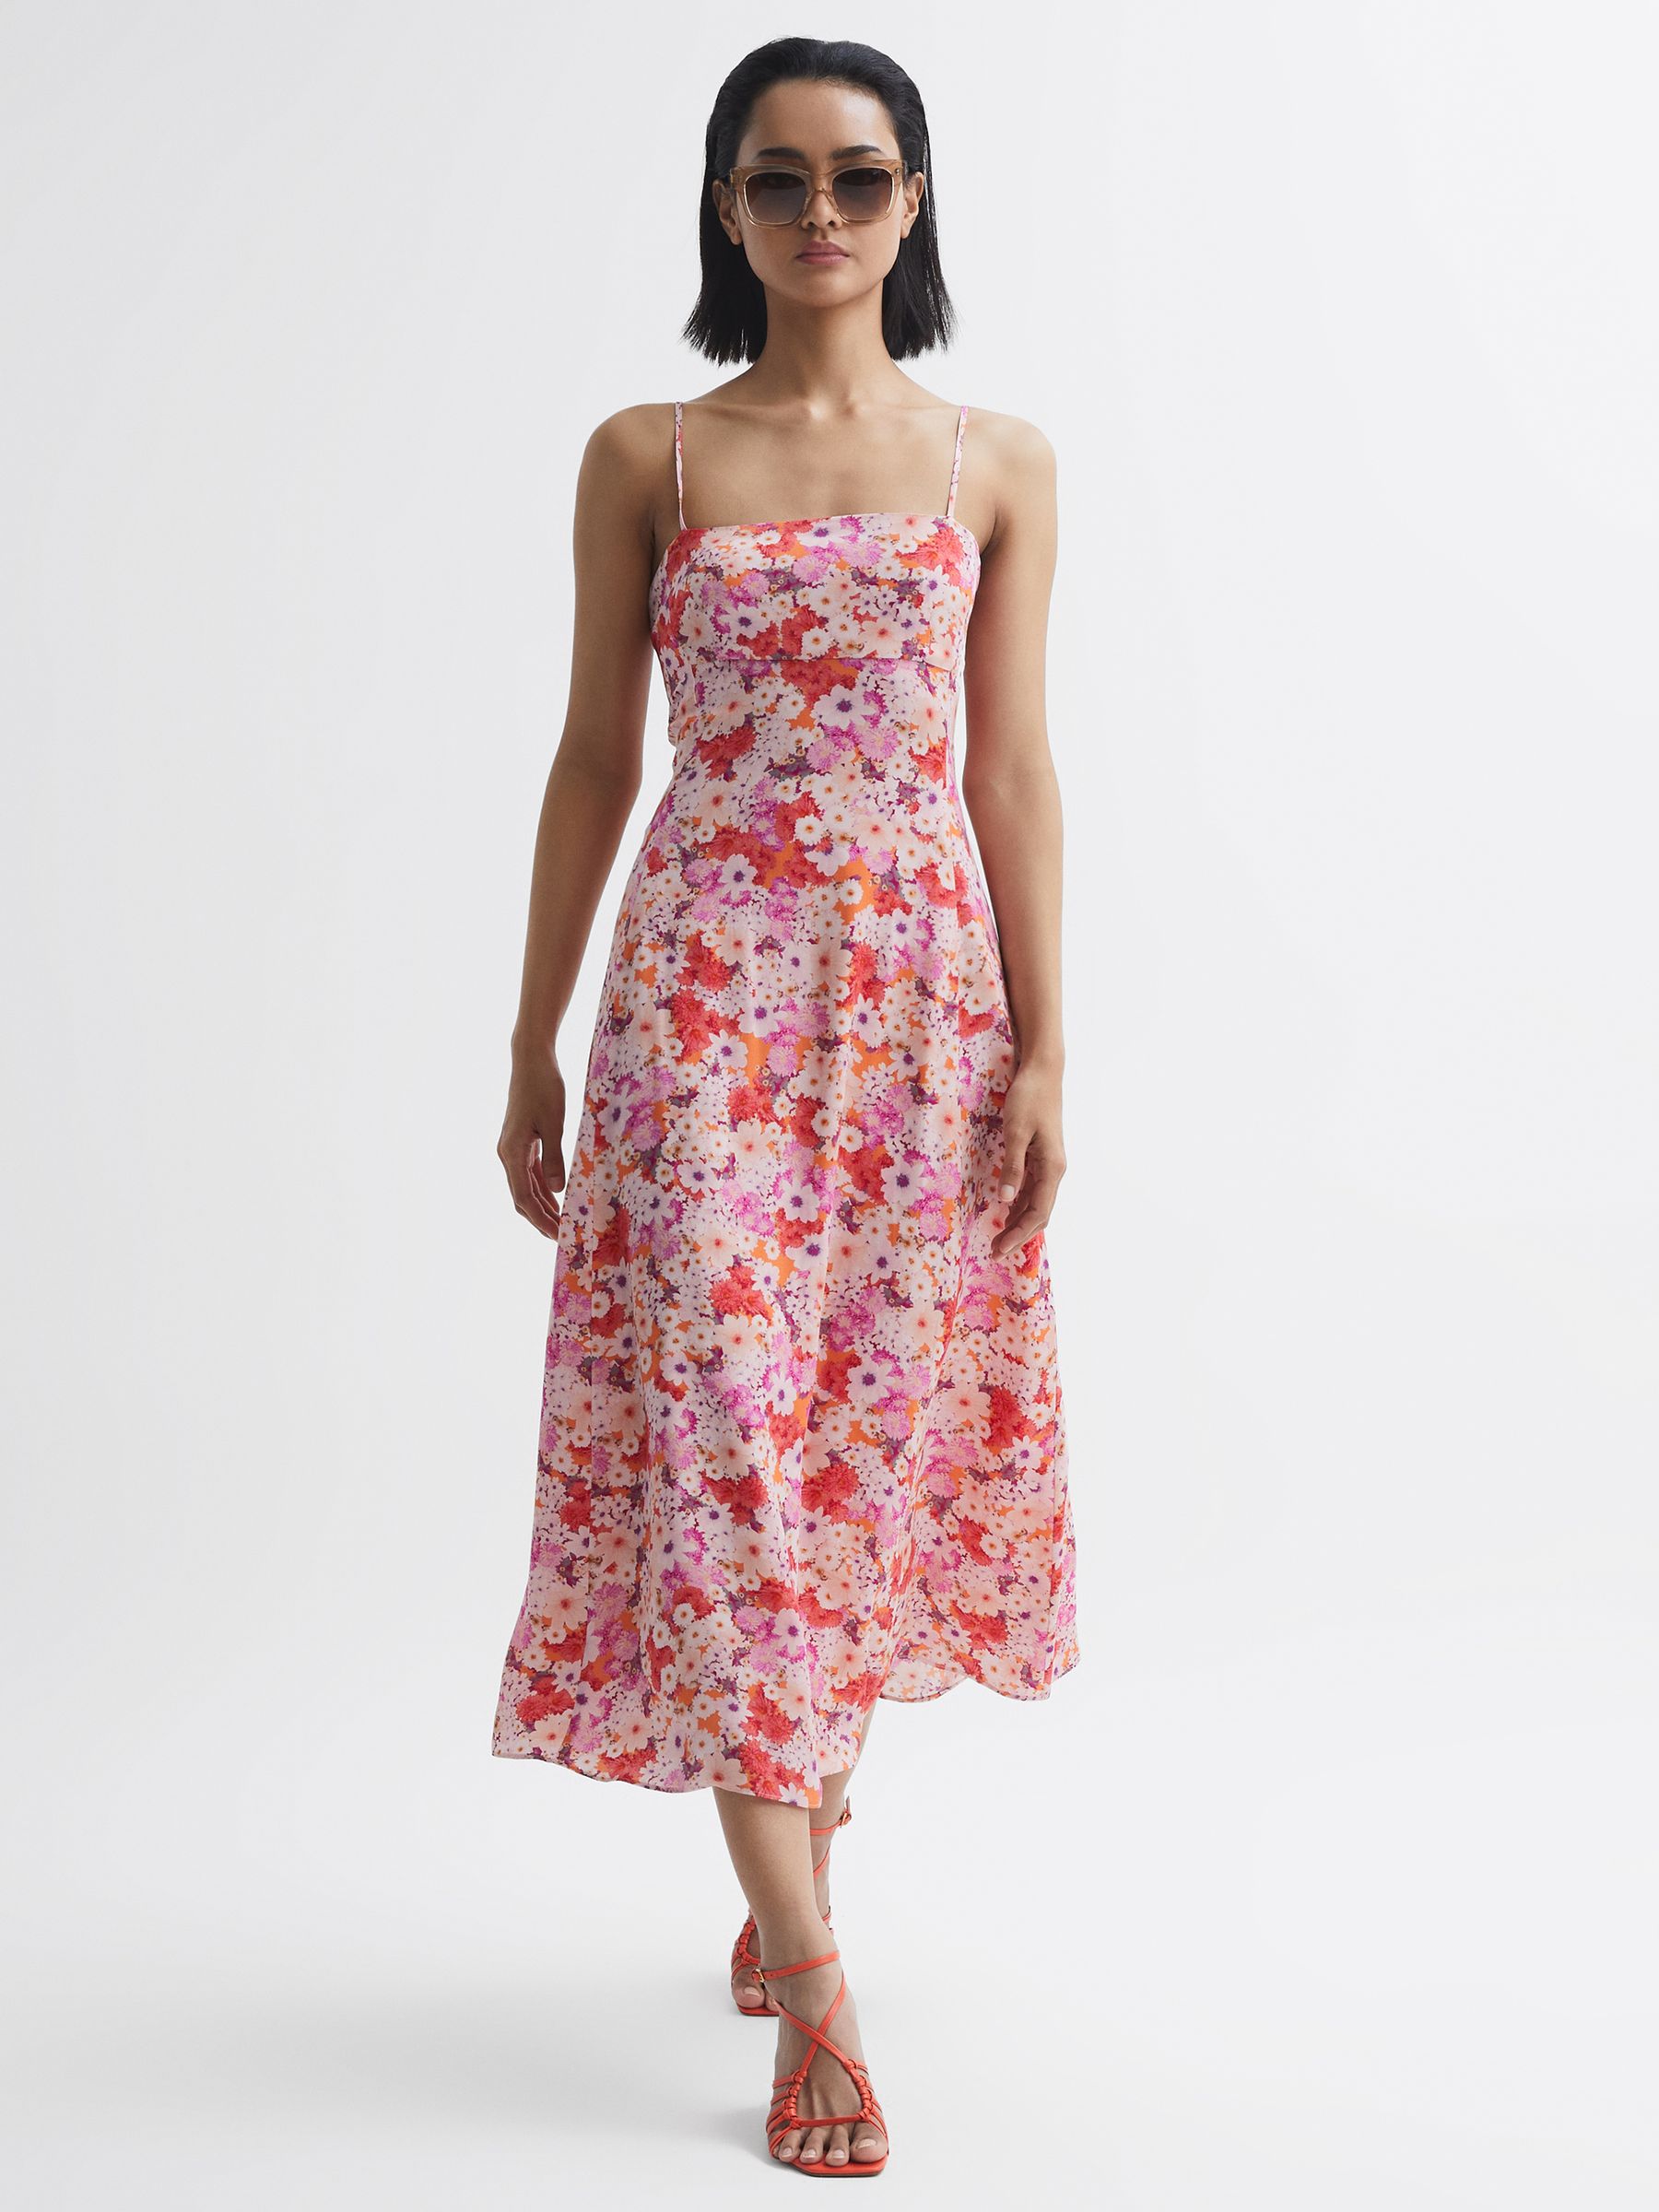 Reiss Bonnie Floral Print Fitted Midi Dress - REISS